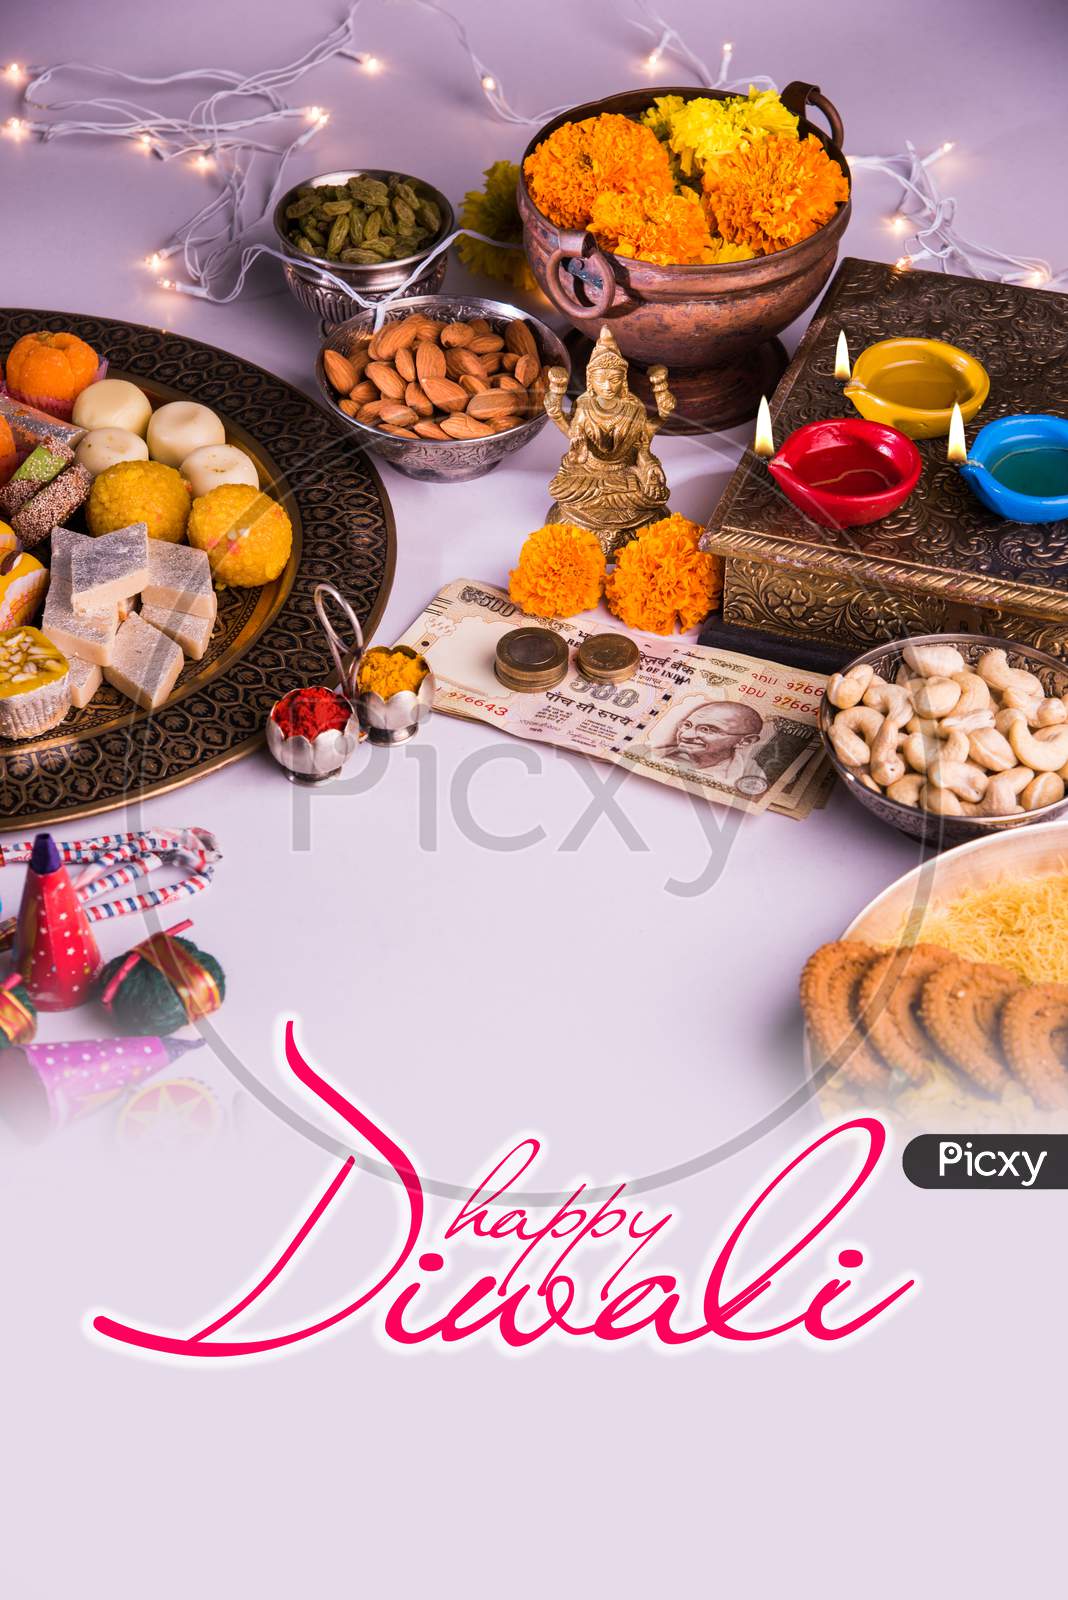 Happy Diwali greeting card showing Goddess Laxmi, sweets etc